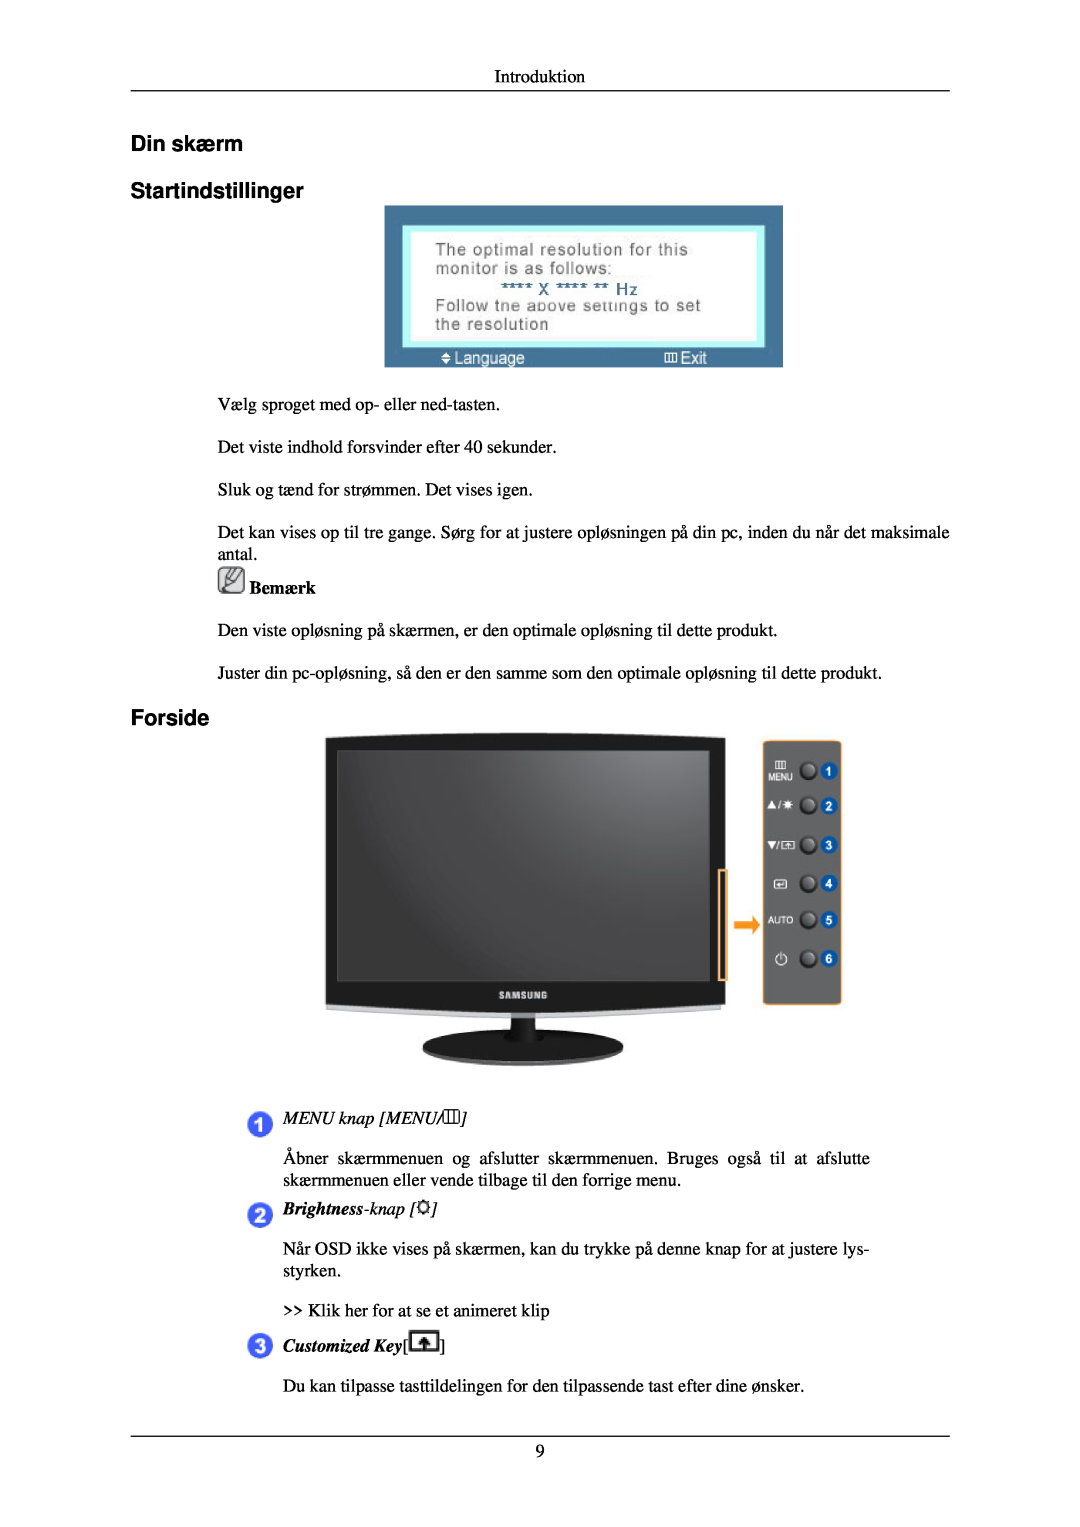 Samsung LS24CMKKFV/EN manual Din skærm Startindstillinger, Forside, MENU knap MENU, Brightness-knap, Customized Key 